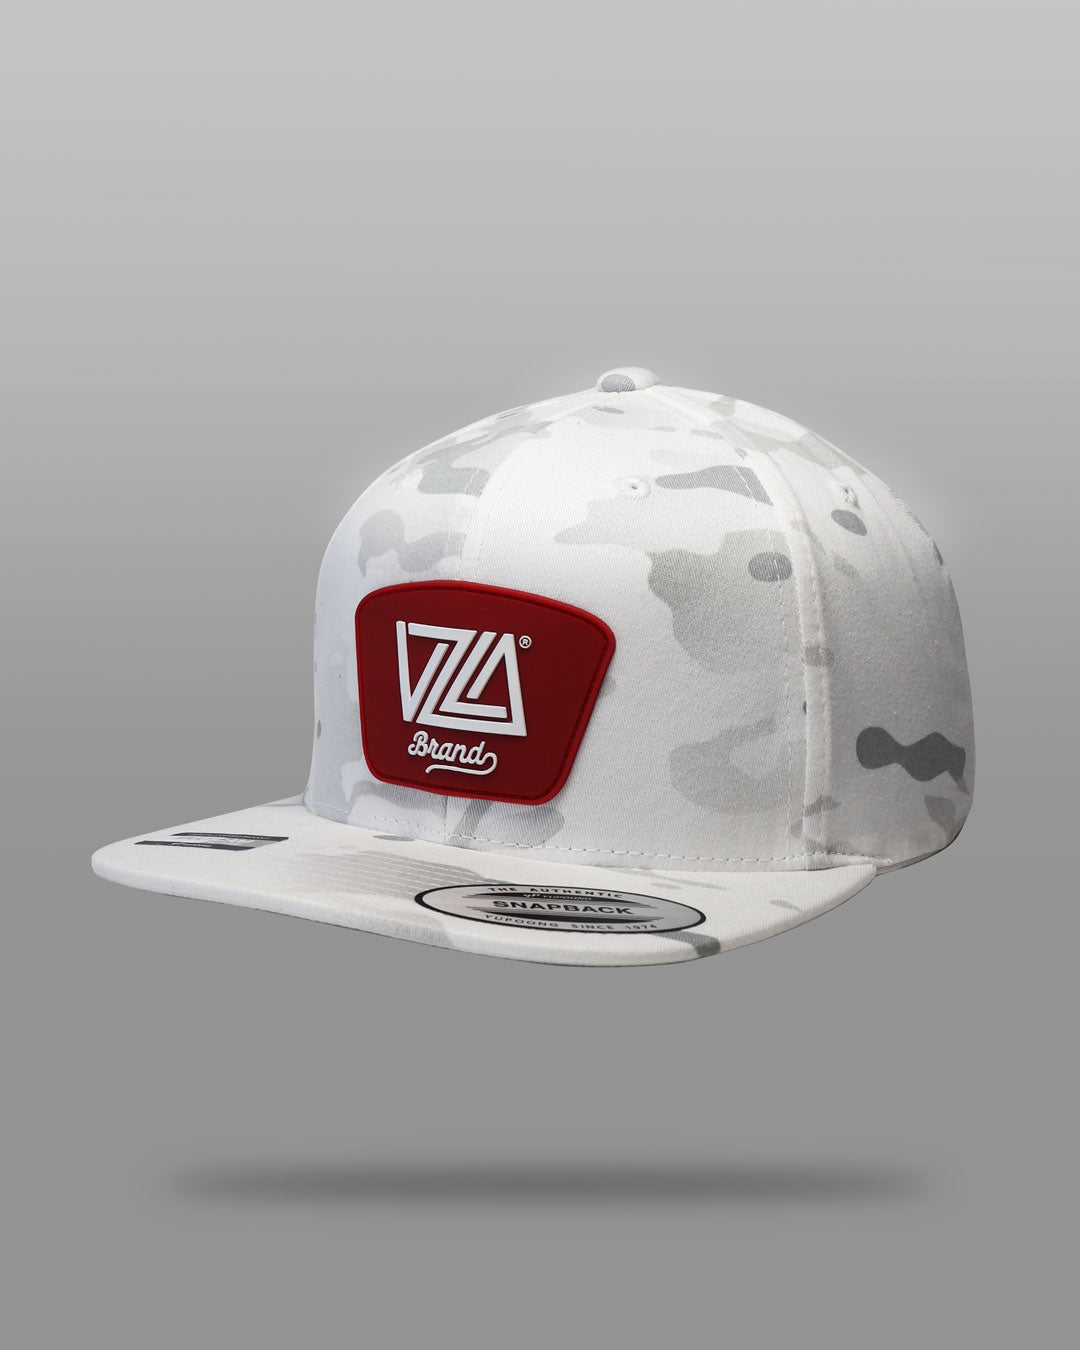 VZLA Artica Flat Bill Snapback Hat